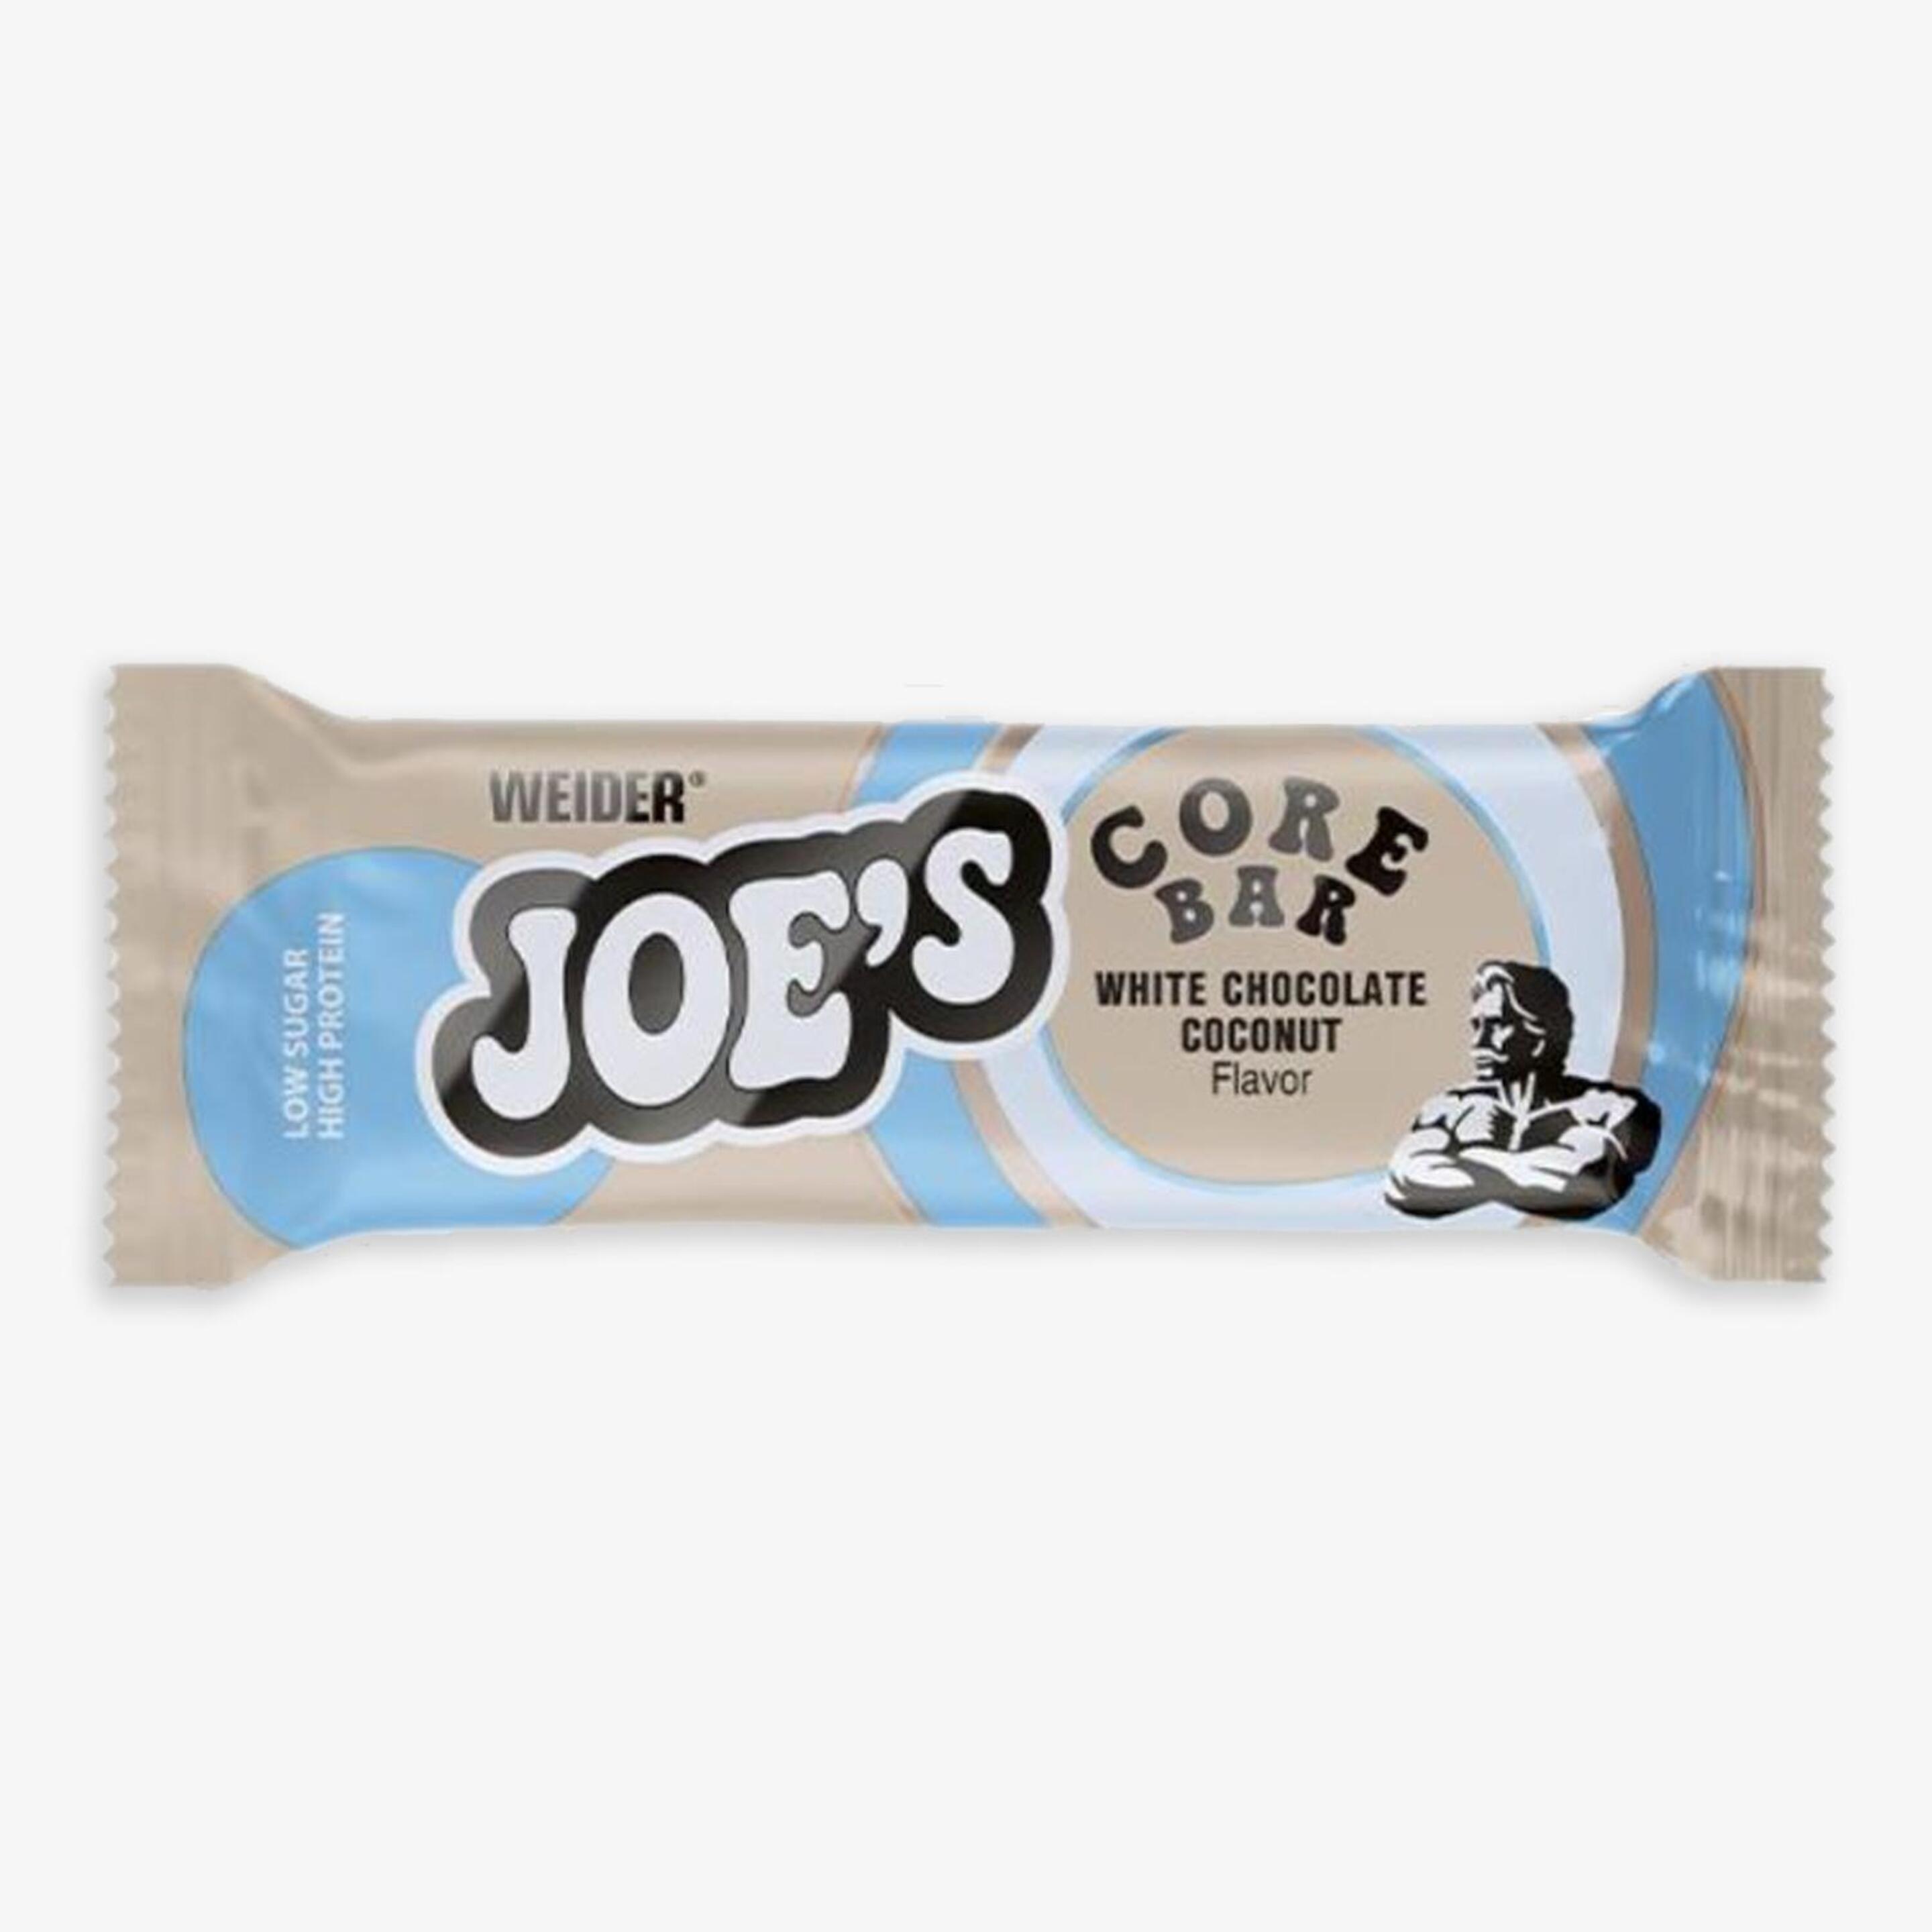 Joe Core Bar Energ Chocolate Blanco 50grs